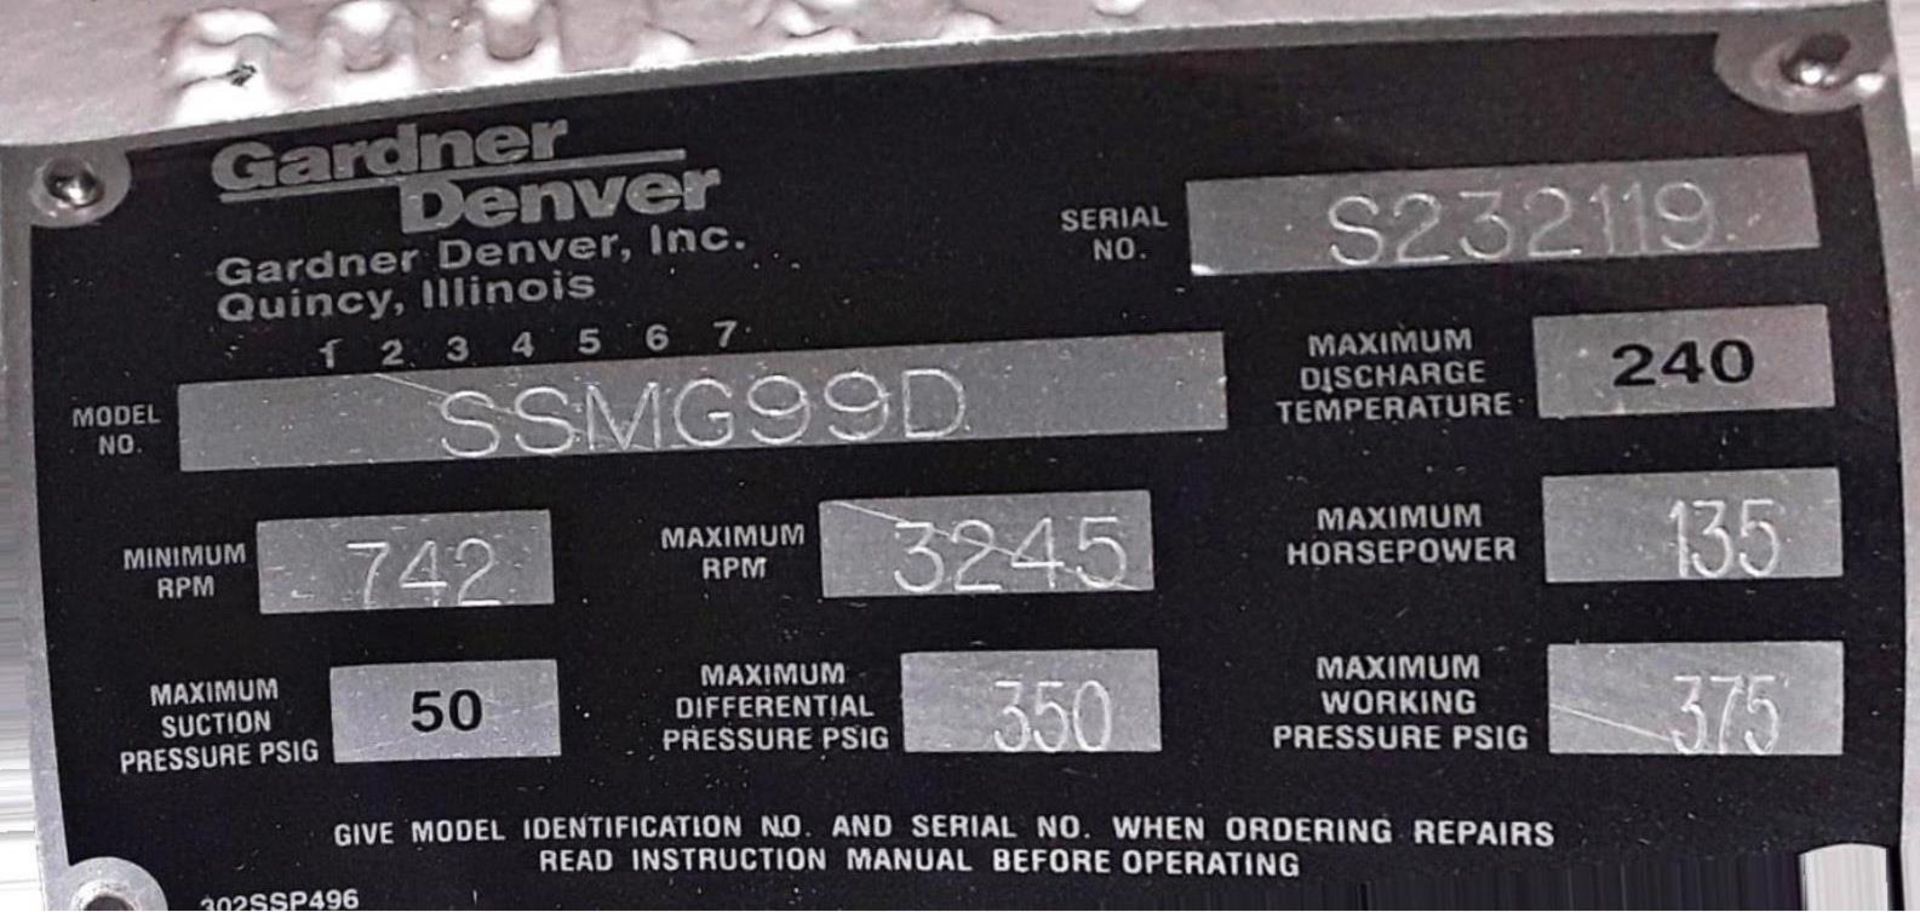 GARDNER DENVER SSMG99D GAS COMPRESSOR WITH 135 MAX. HP, 3245 MAX. RPM, S/N: S232119 (CI) [SKU - Image 3 of 3